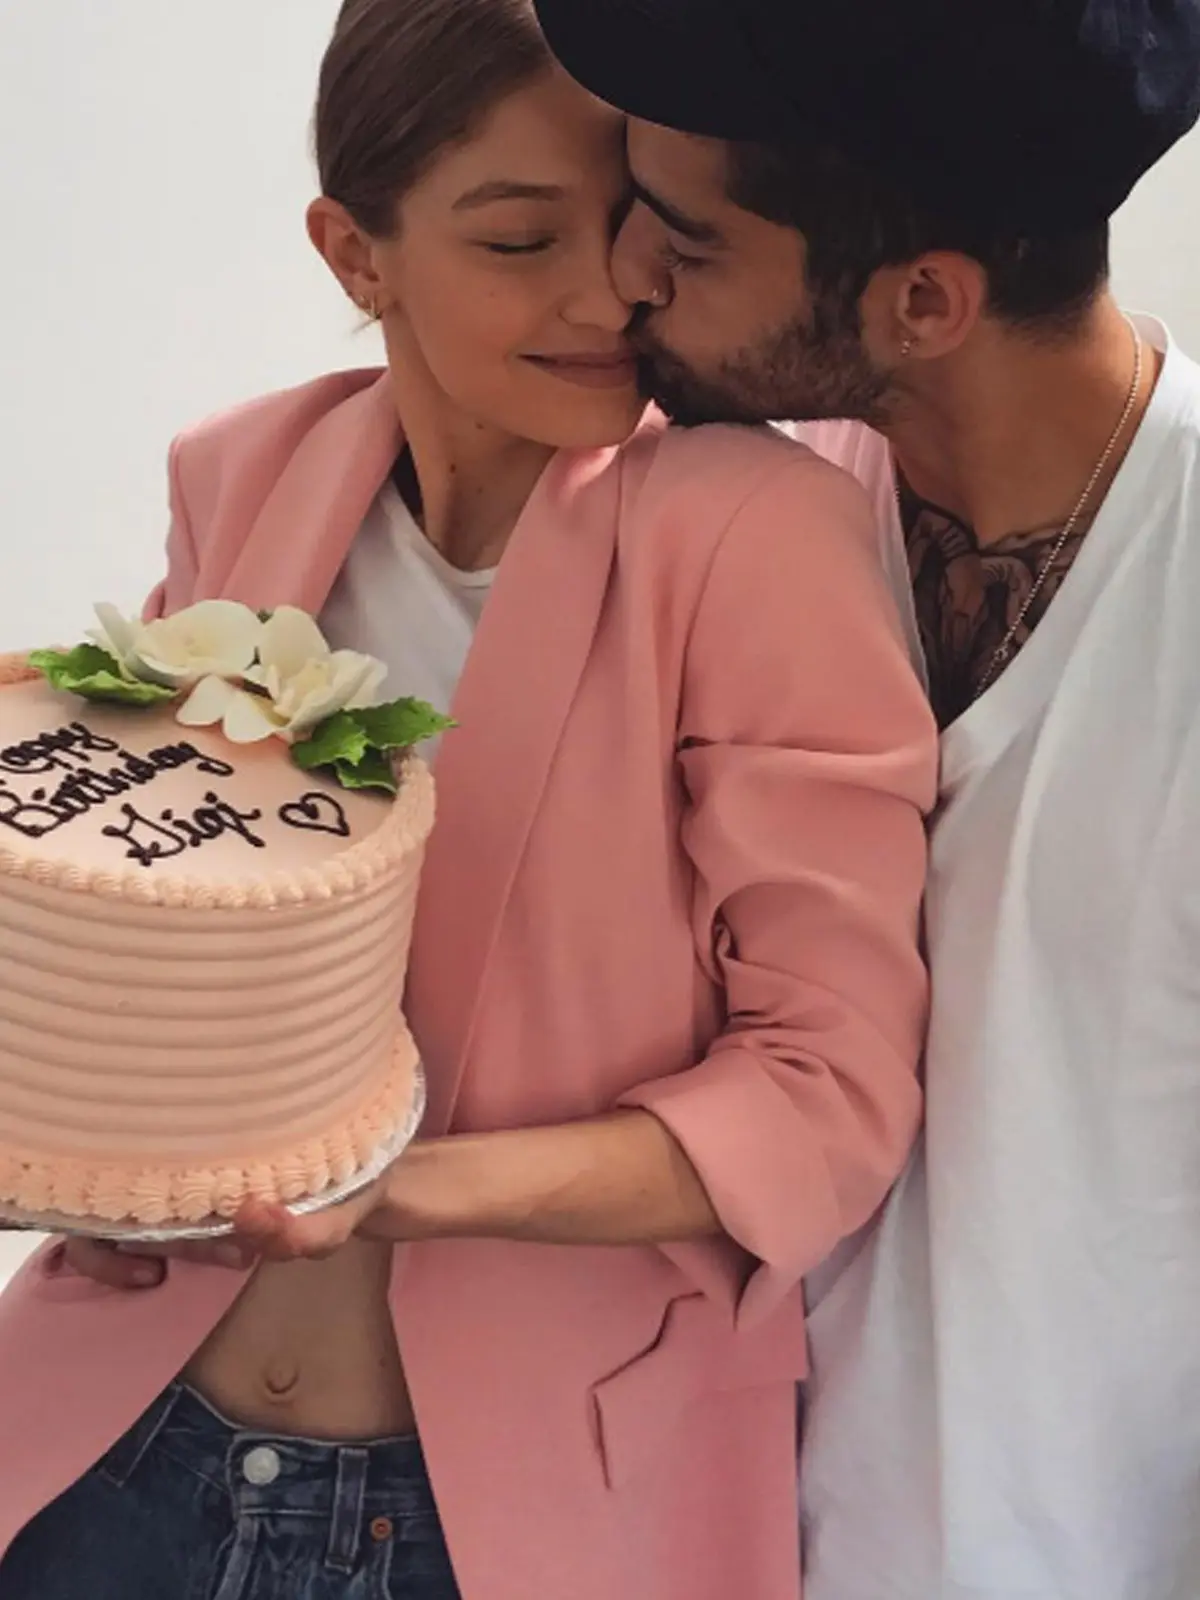 Zayn Malik memberikan kue dan ciuman spesial untuk Gigi Hadid di ulang tahun sang kekasih yang ke-22. (Instagram Gigi Hadid)